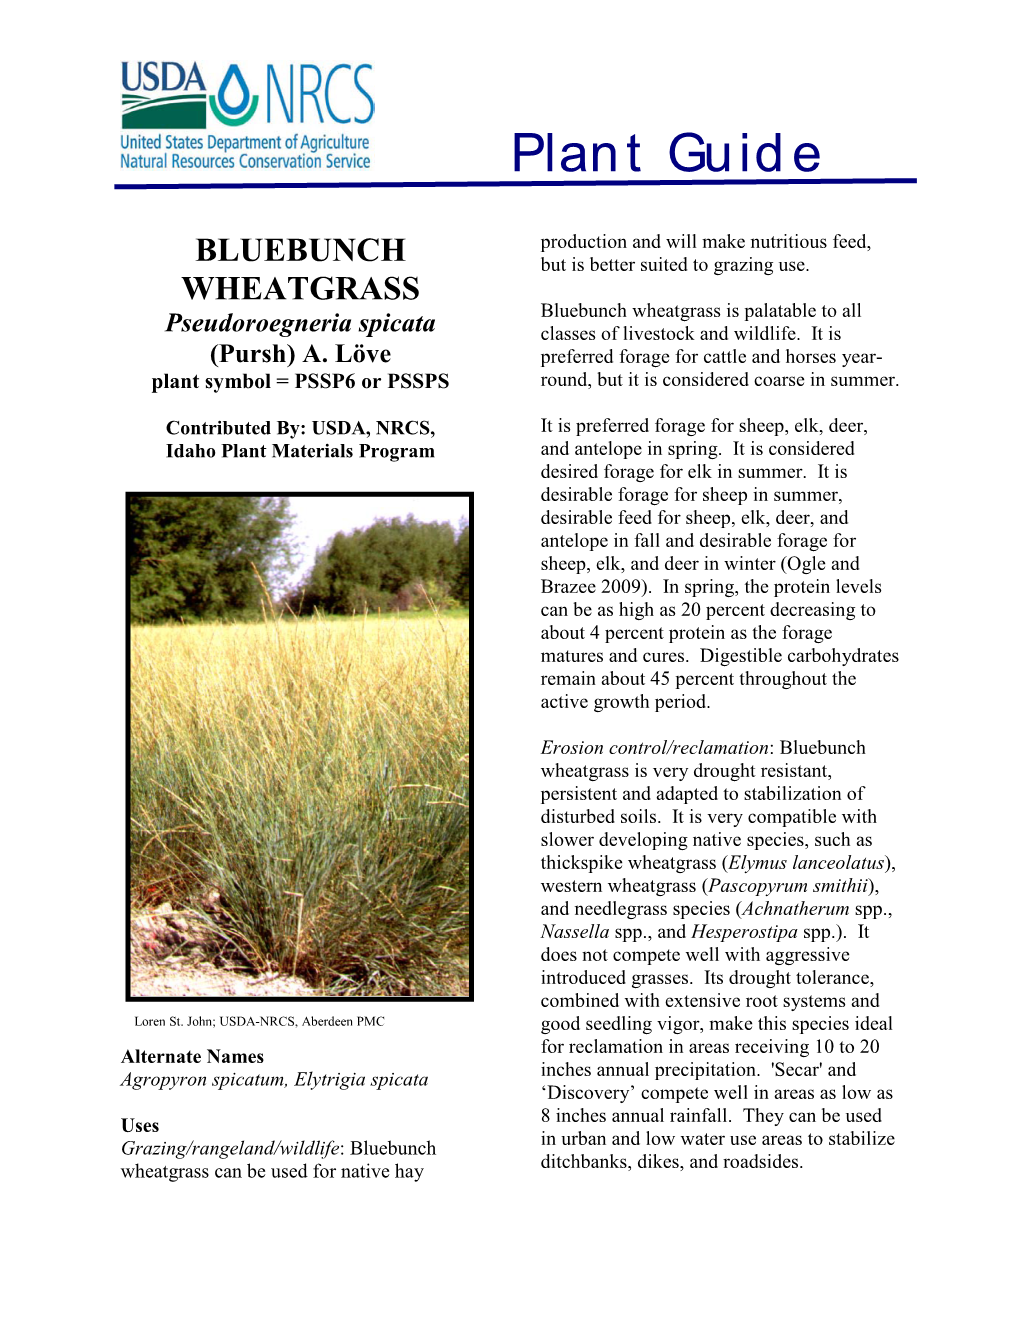 Bluebunch Wheatgrass: Pseudoroegneria Spicata